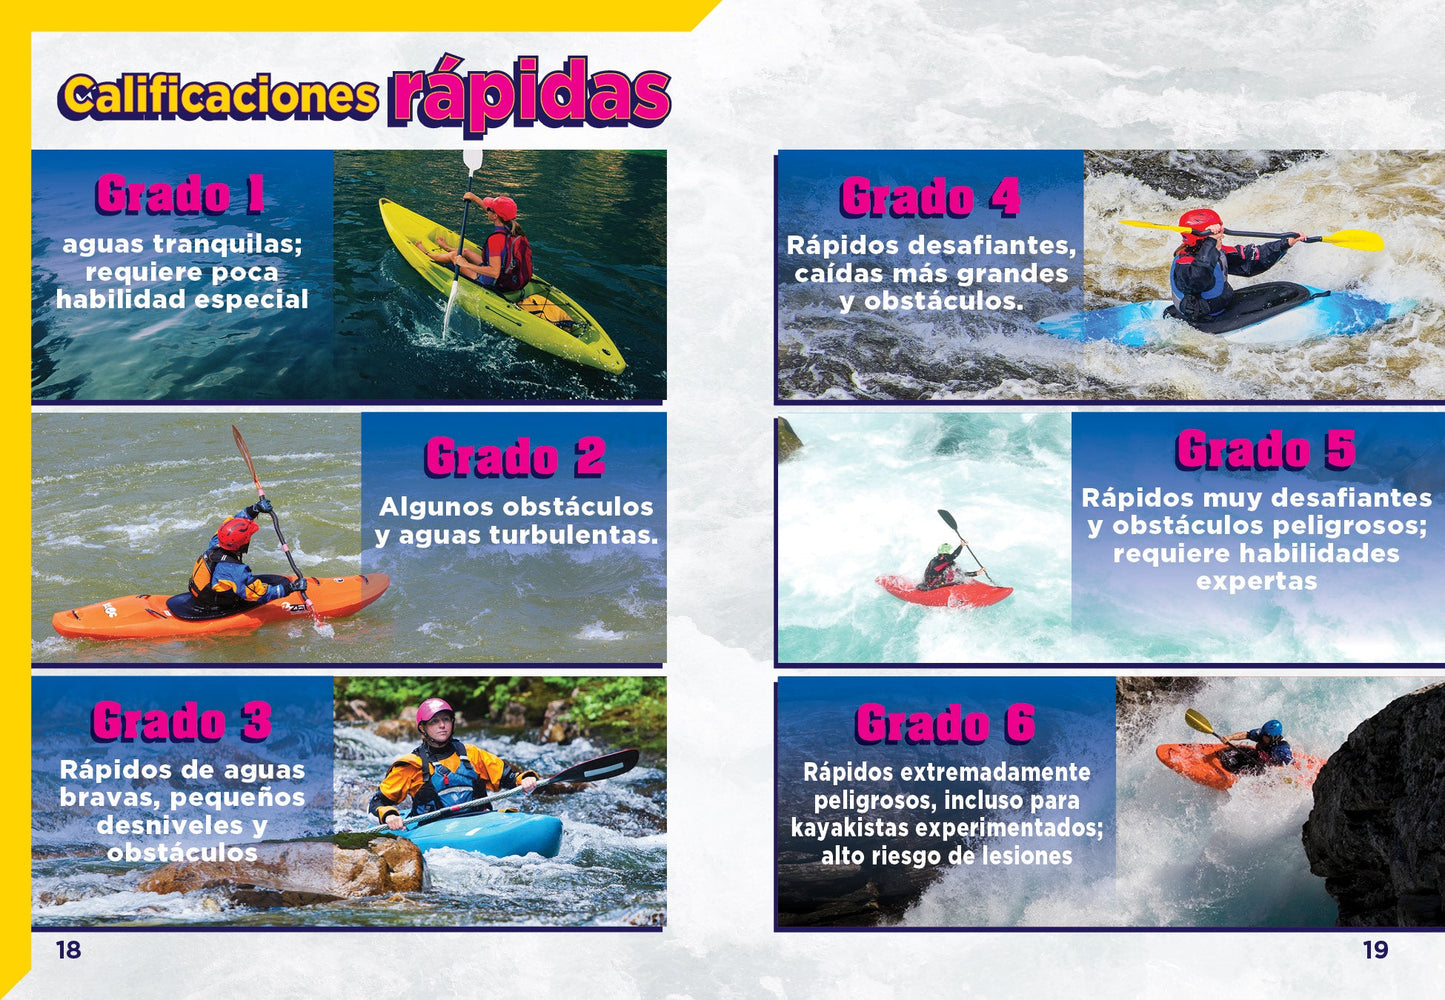 Deportes extremos: Kayak de aguas bravas